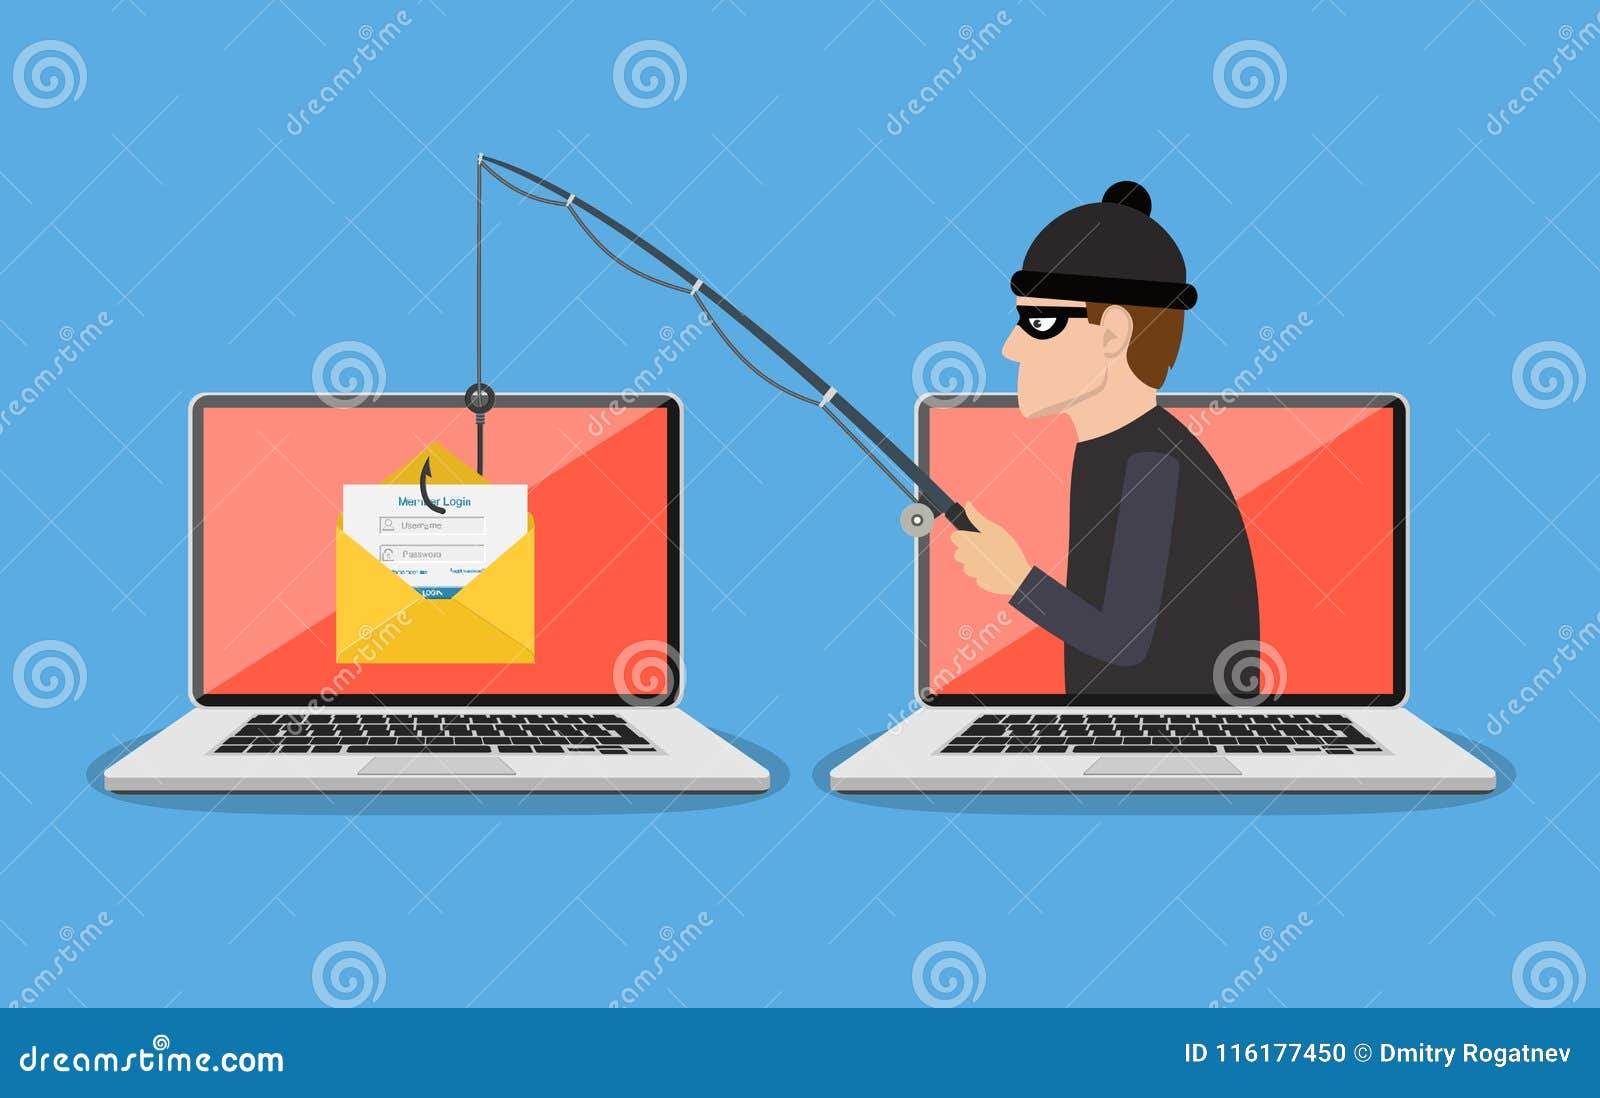 Phishing Scam, Hacker Attack Stock Vector - Illustration of cyber